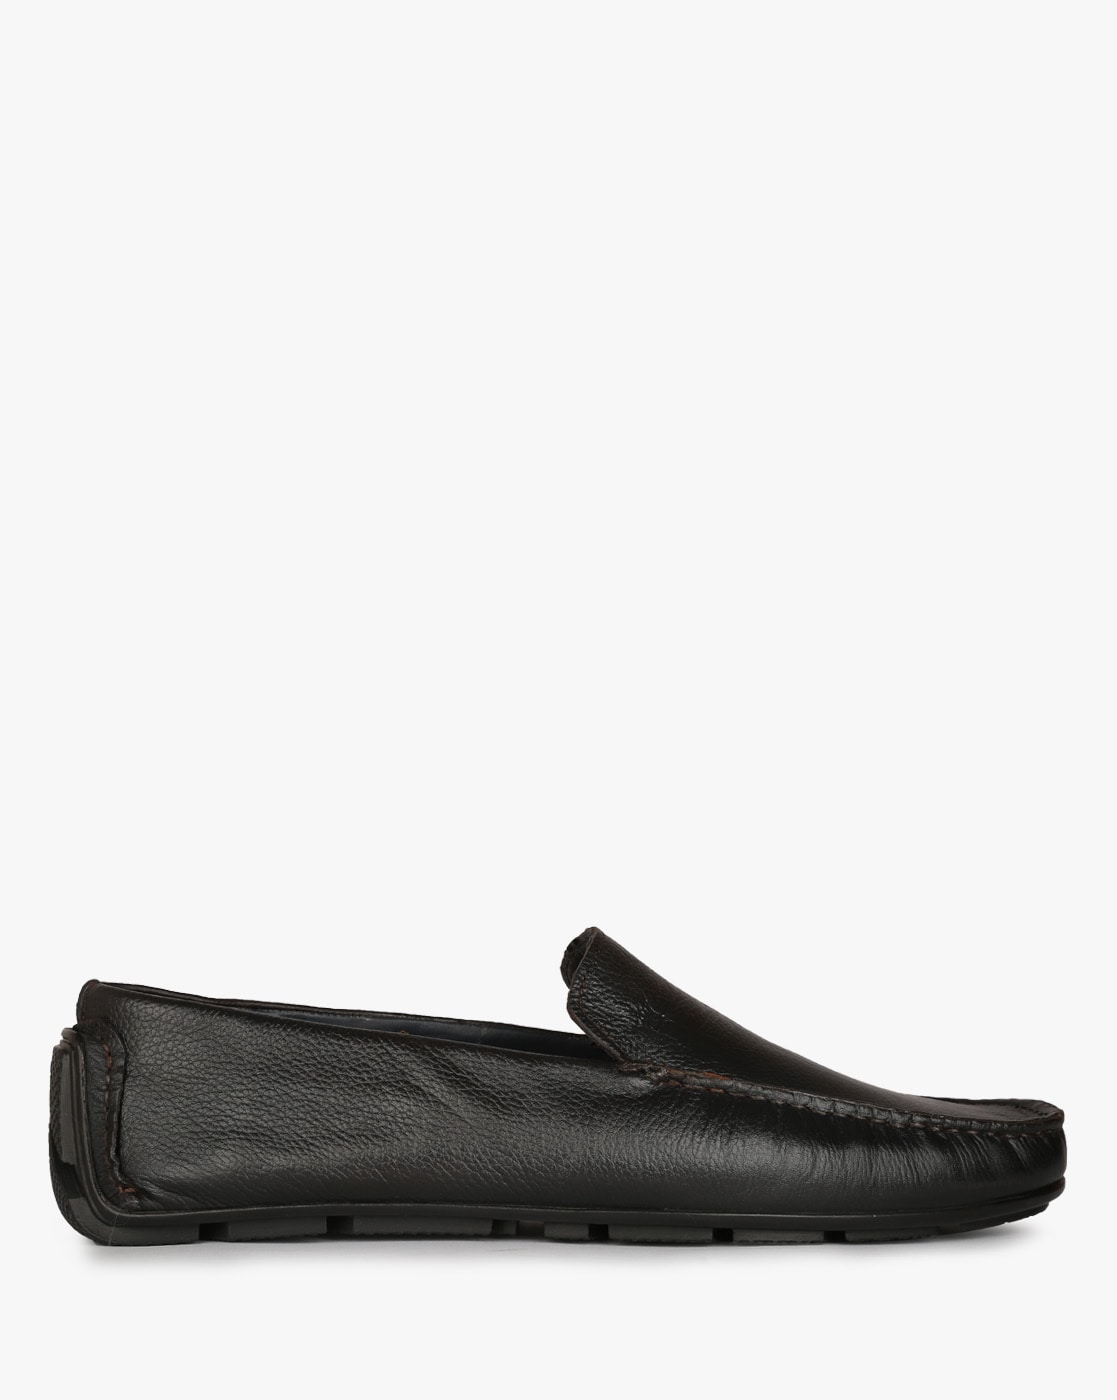 louis philippe shoes black formal